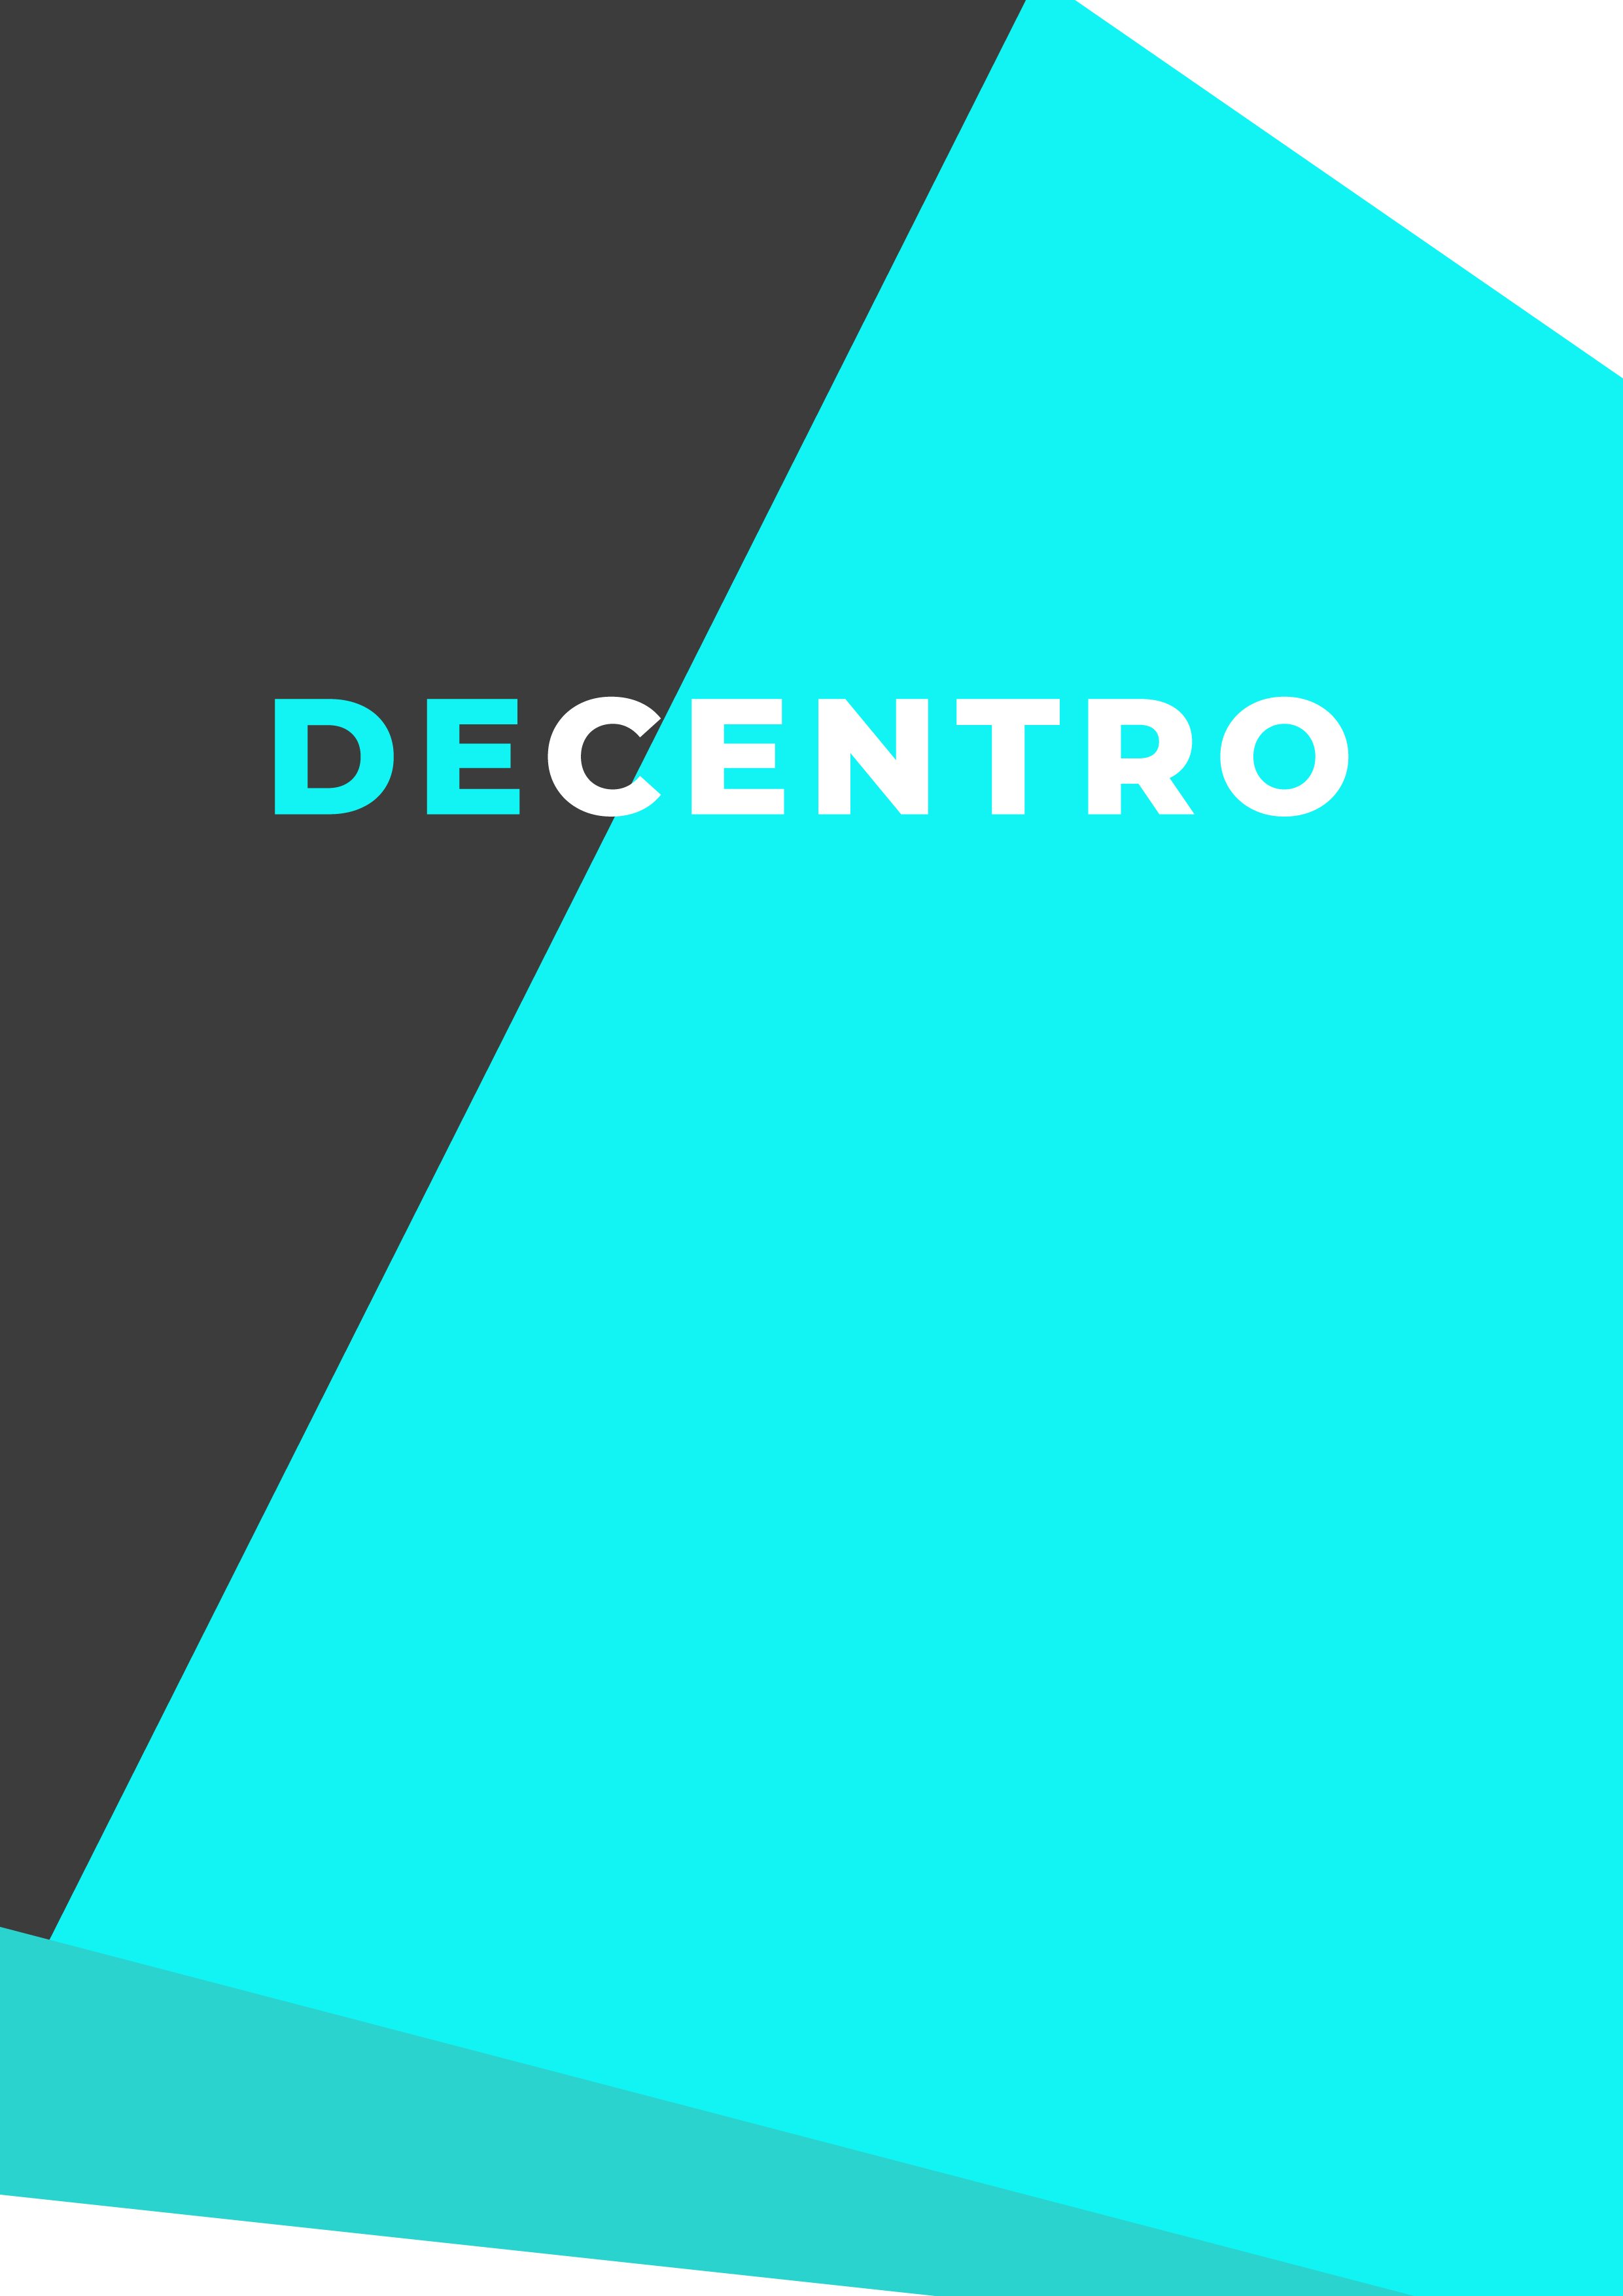 decentro-graphic-vertical-shapes-logo-center.jpg